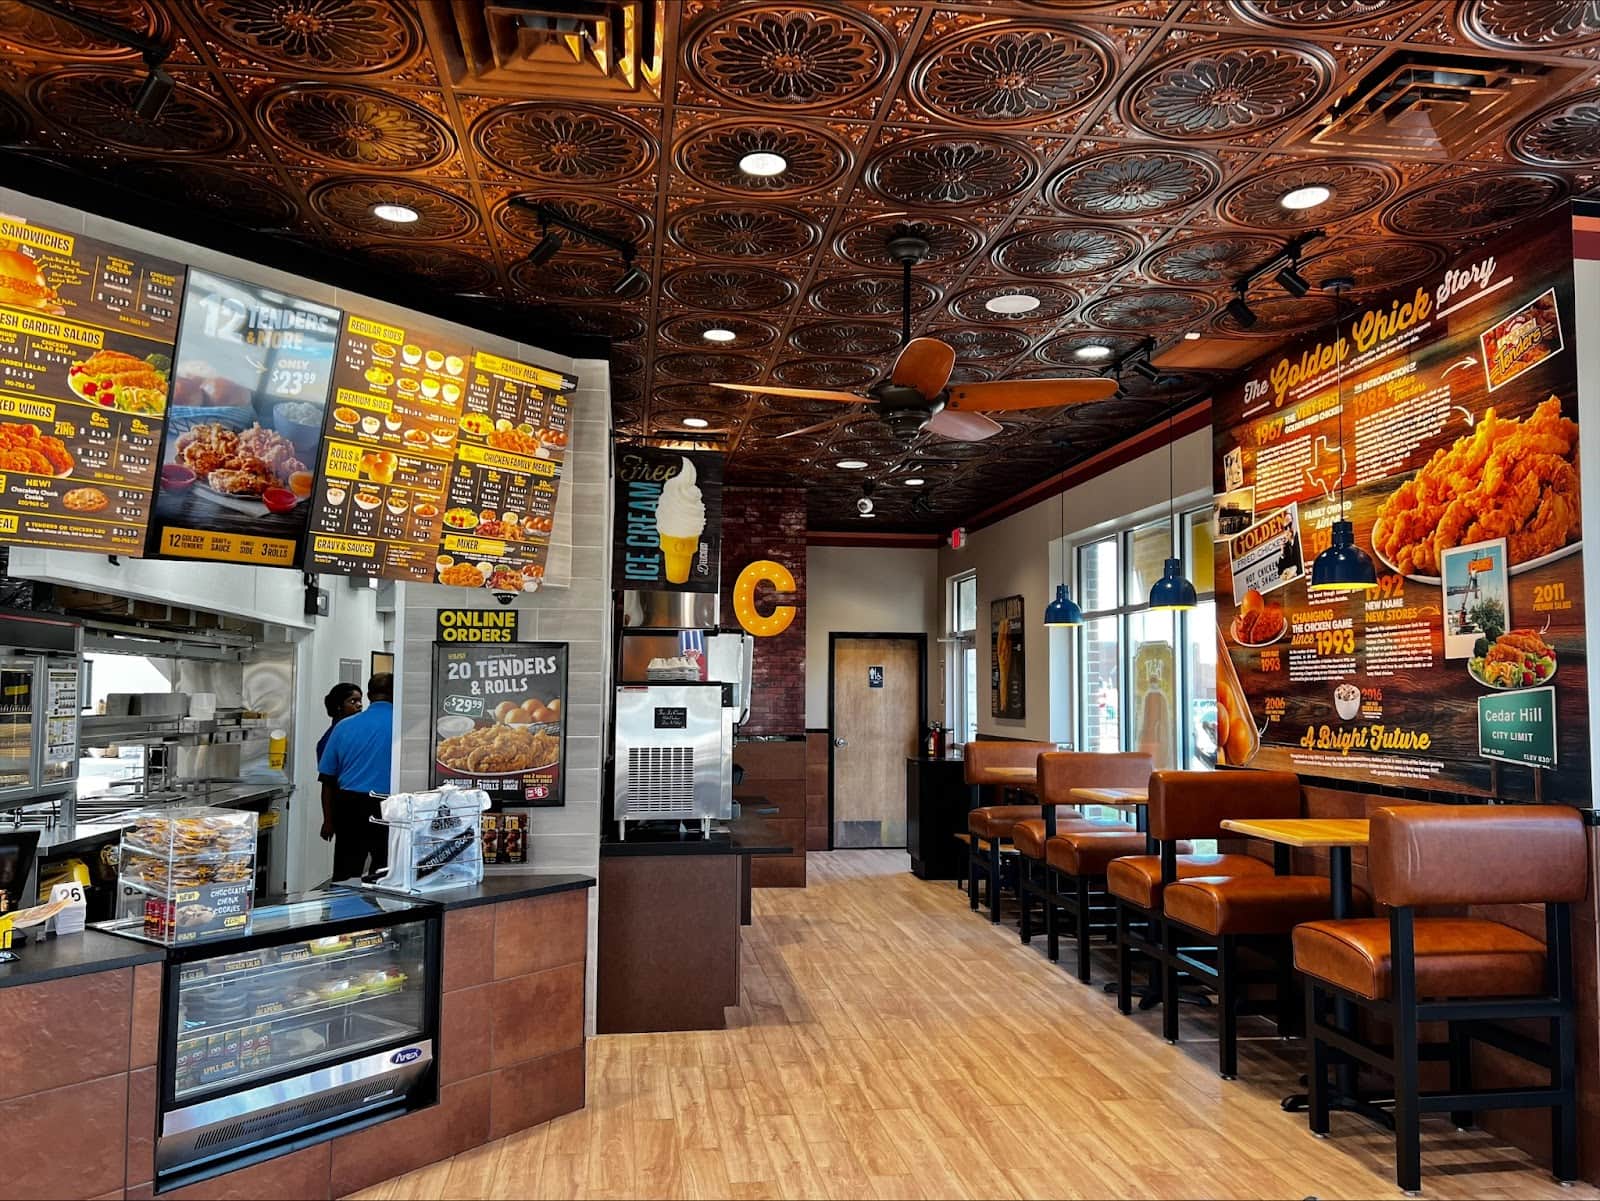 Interior of Golden Chick restaurant